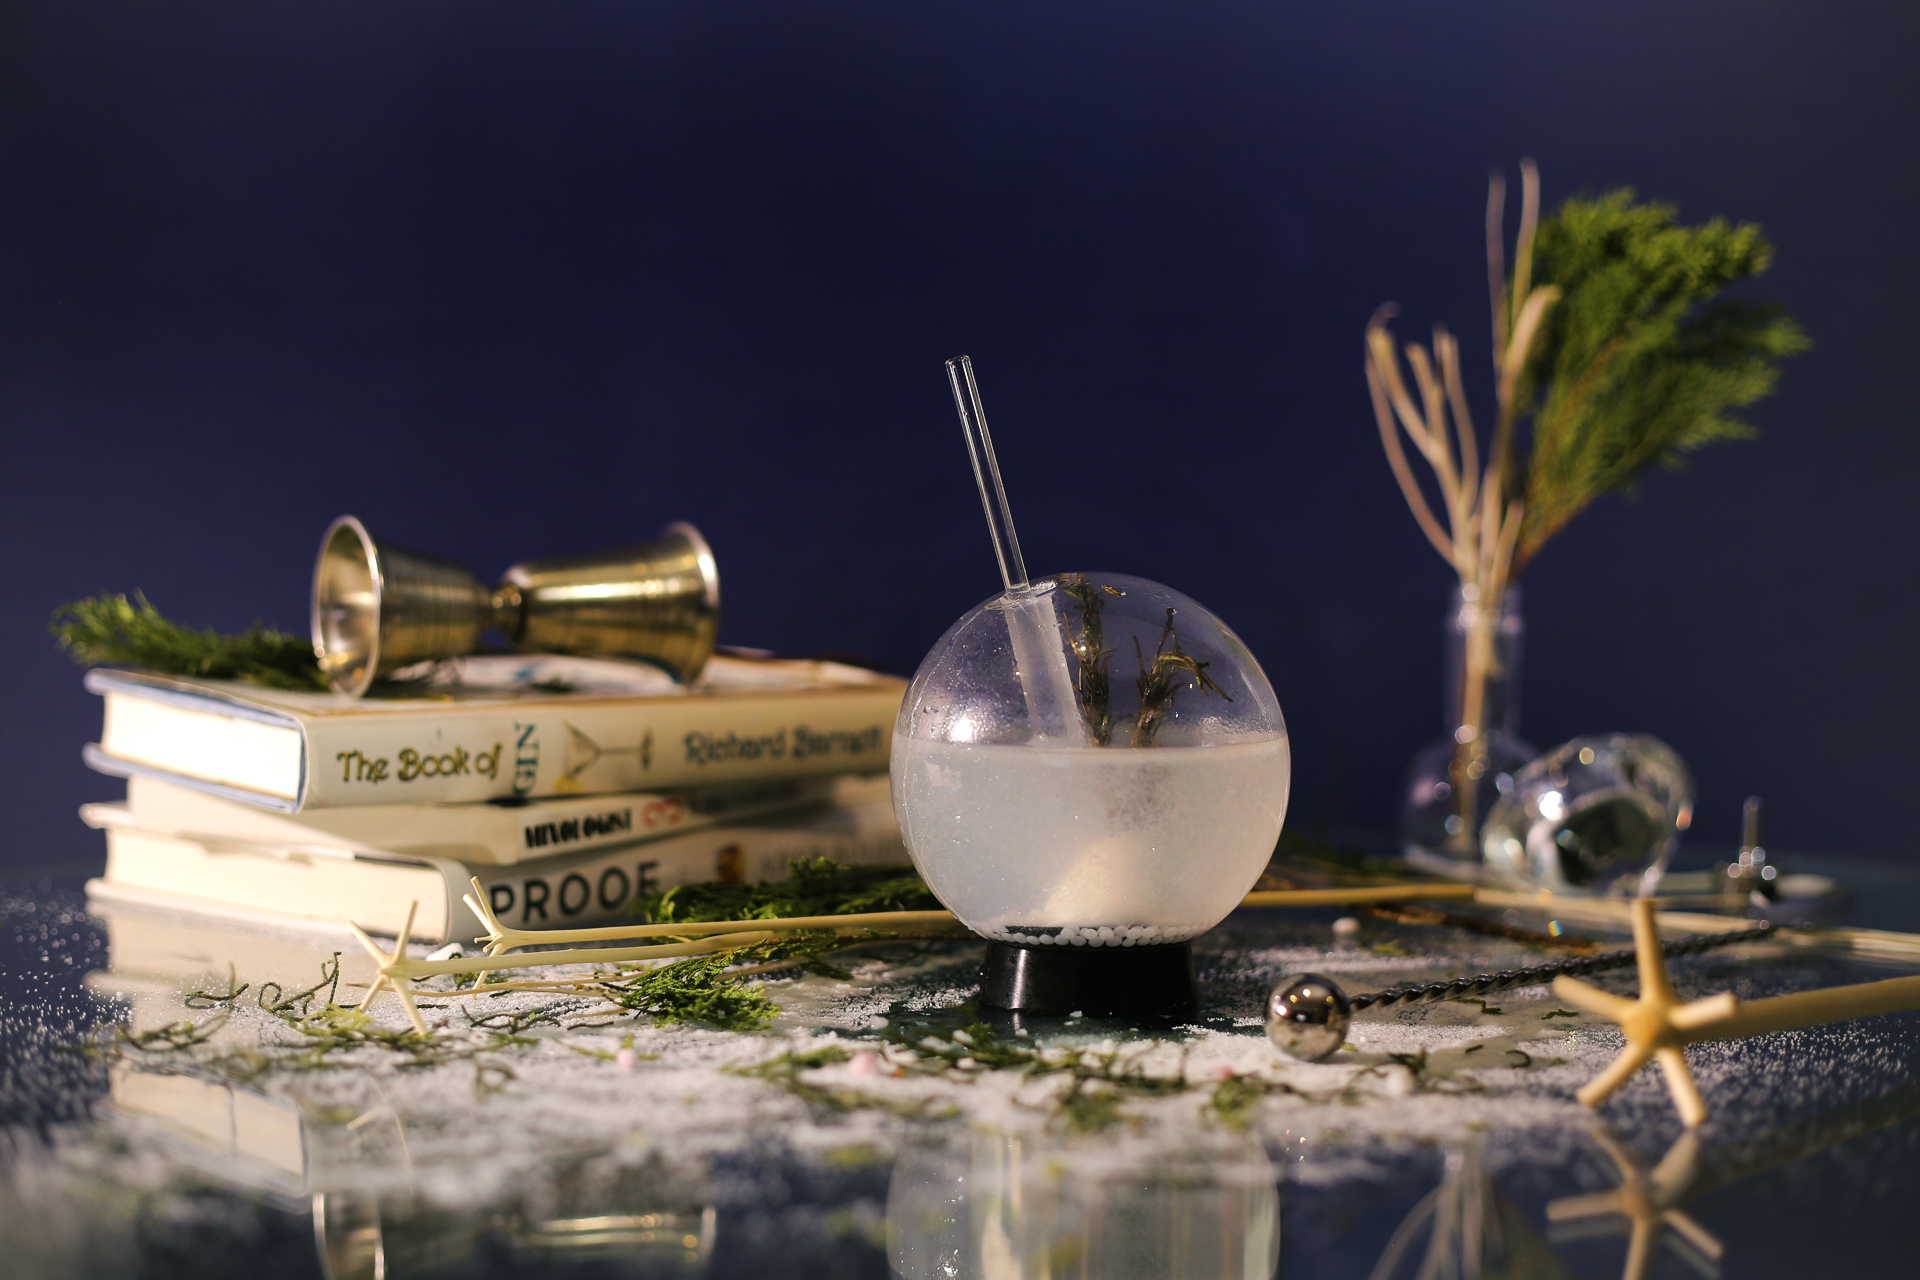 Snow Globe Gin & Tonic Recipe – Ficks Beverage Co